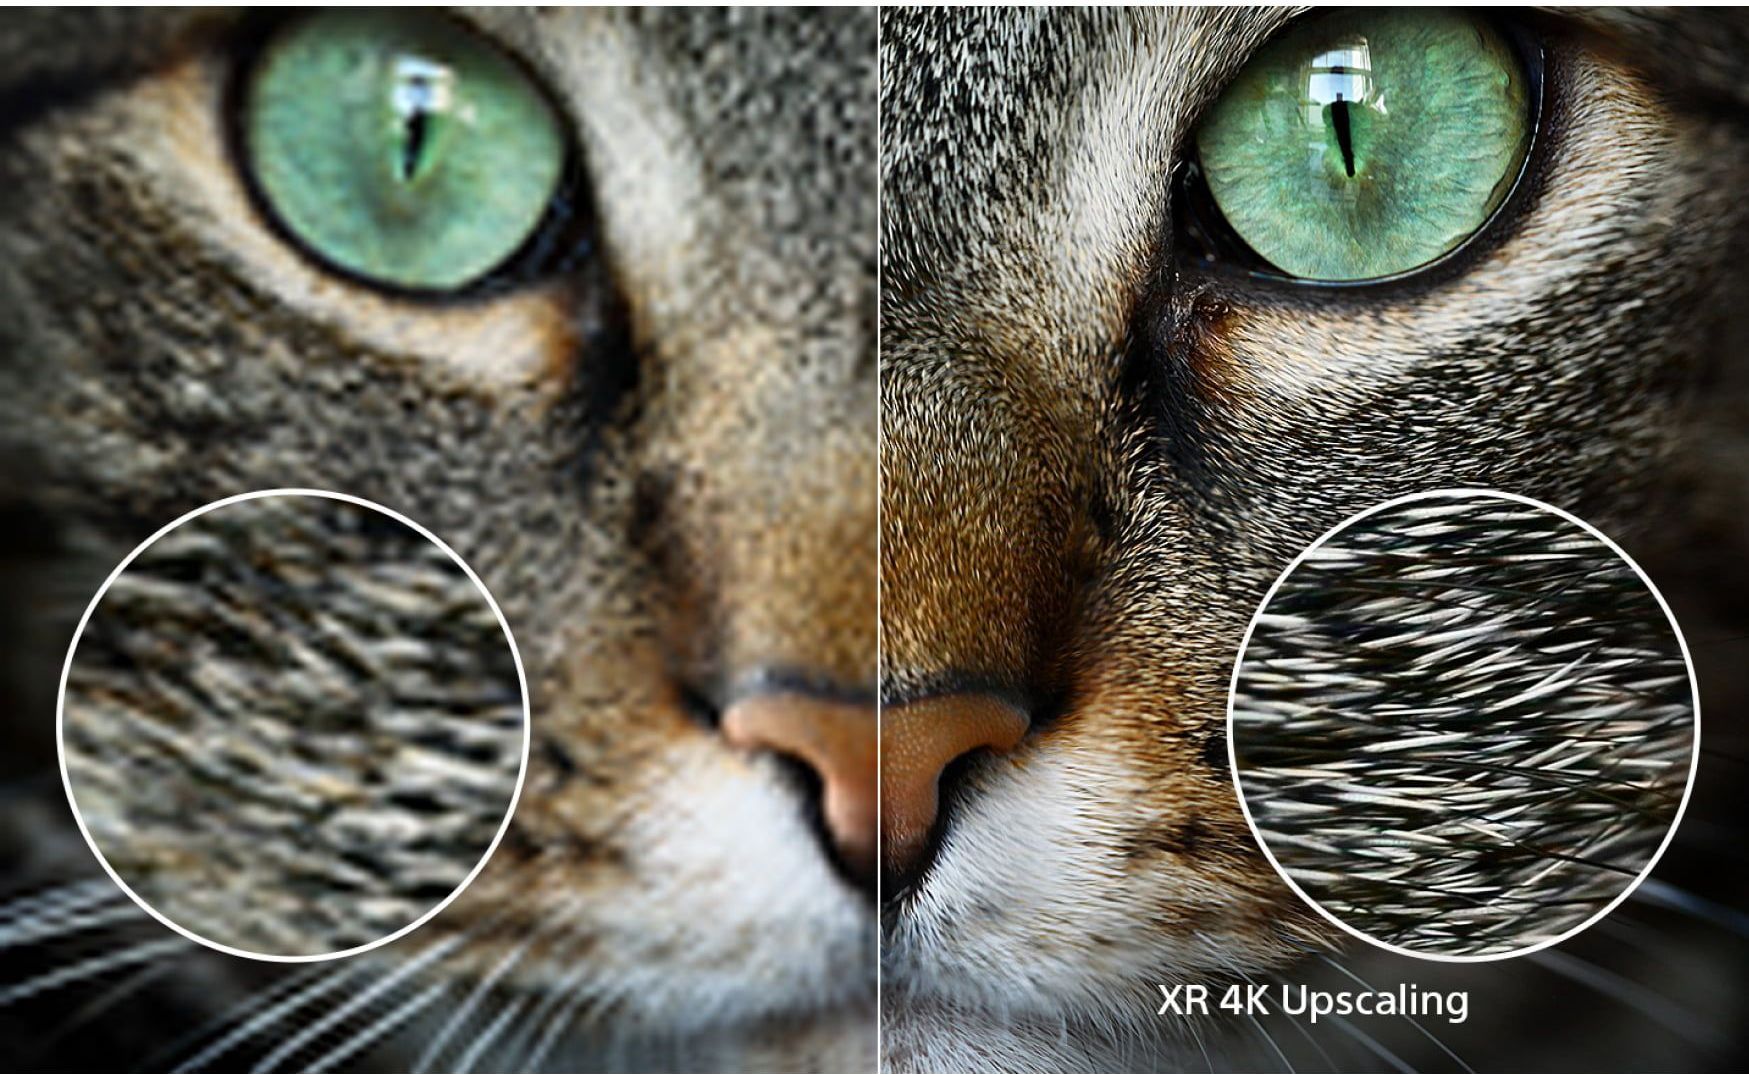 a close up of a cat 's face with the words xr 4k upscaling on a sony smart tv